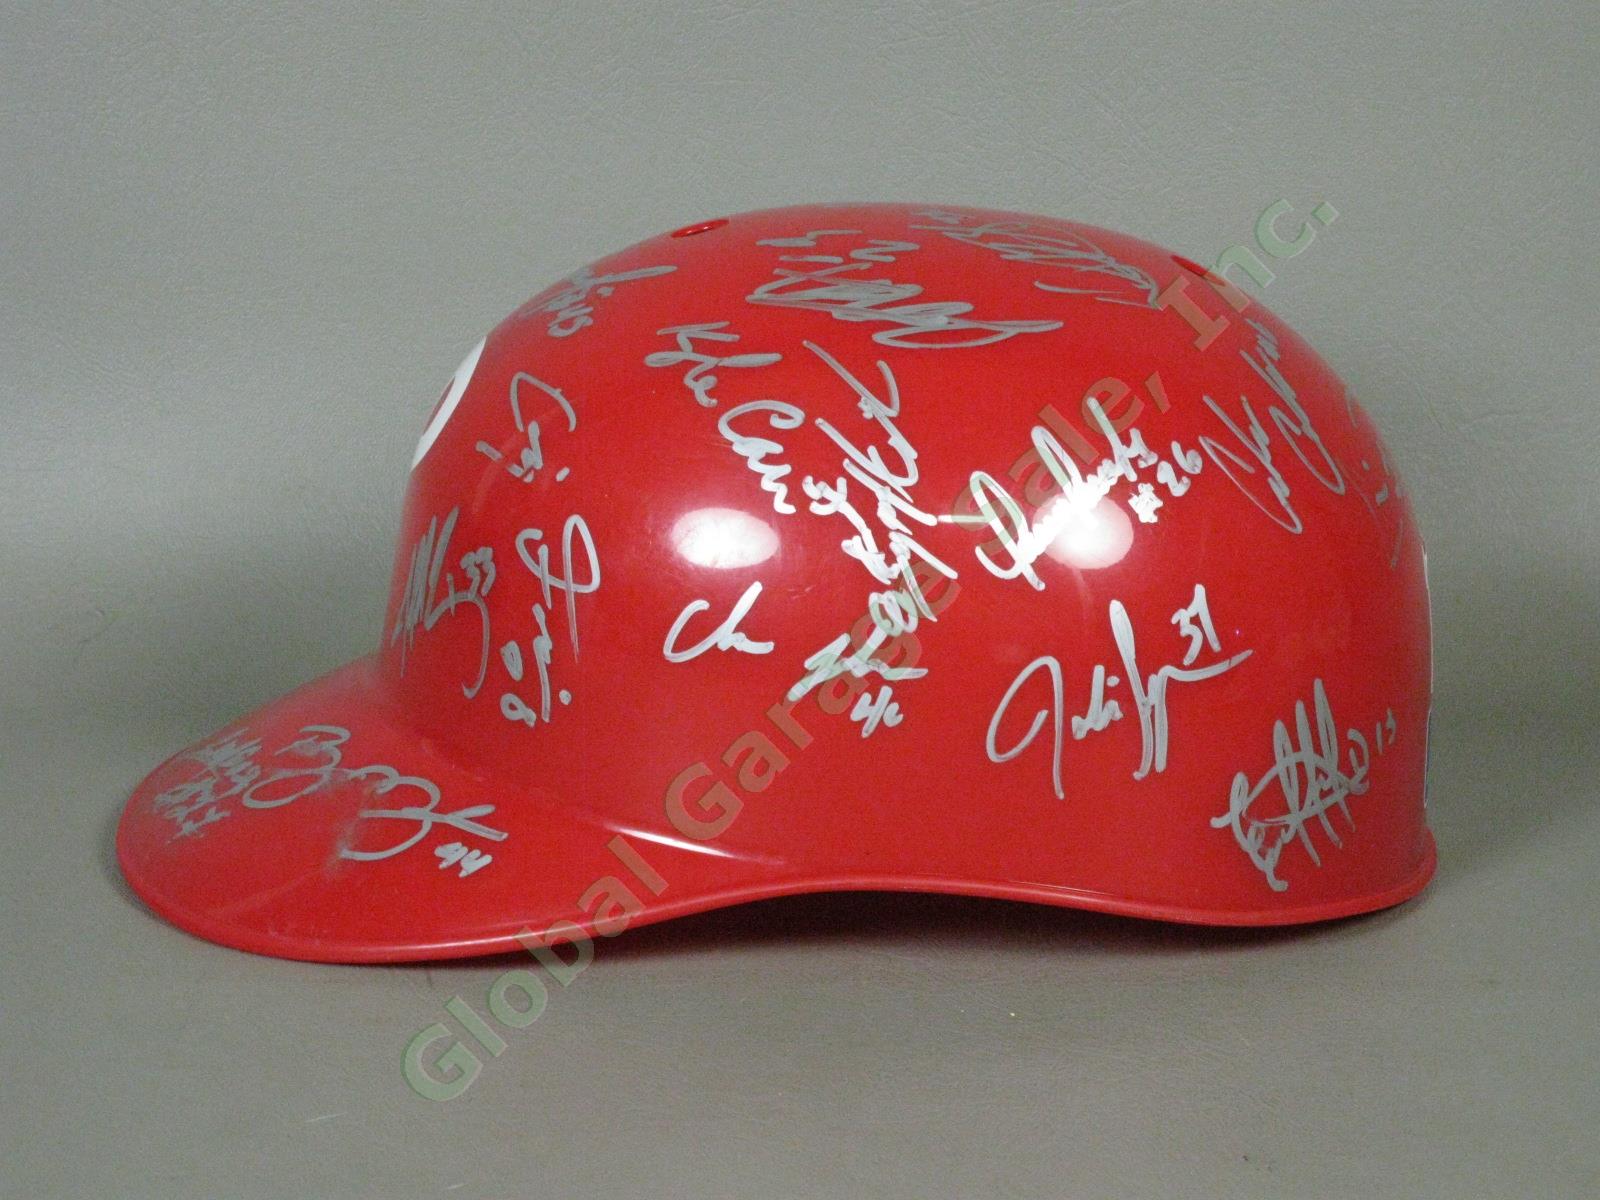 2010 Williamsport Crosscutters Team Signed Baseball Helmet Philadelphia Phillies 3